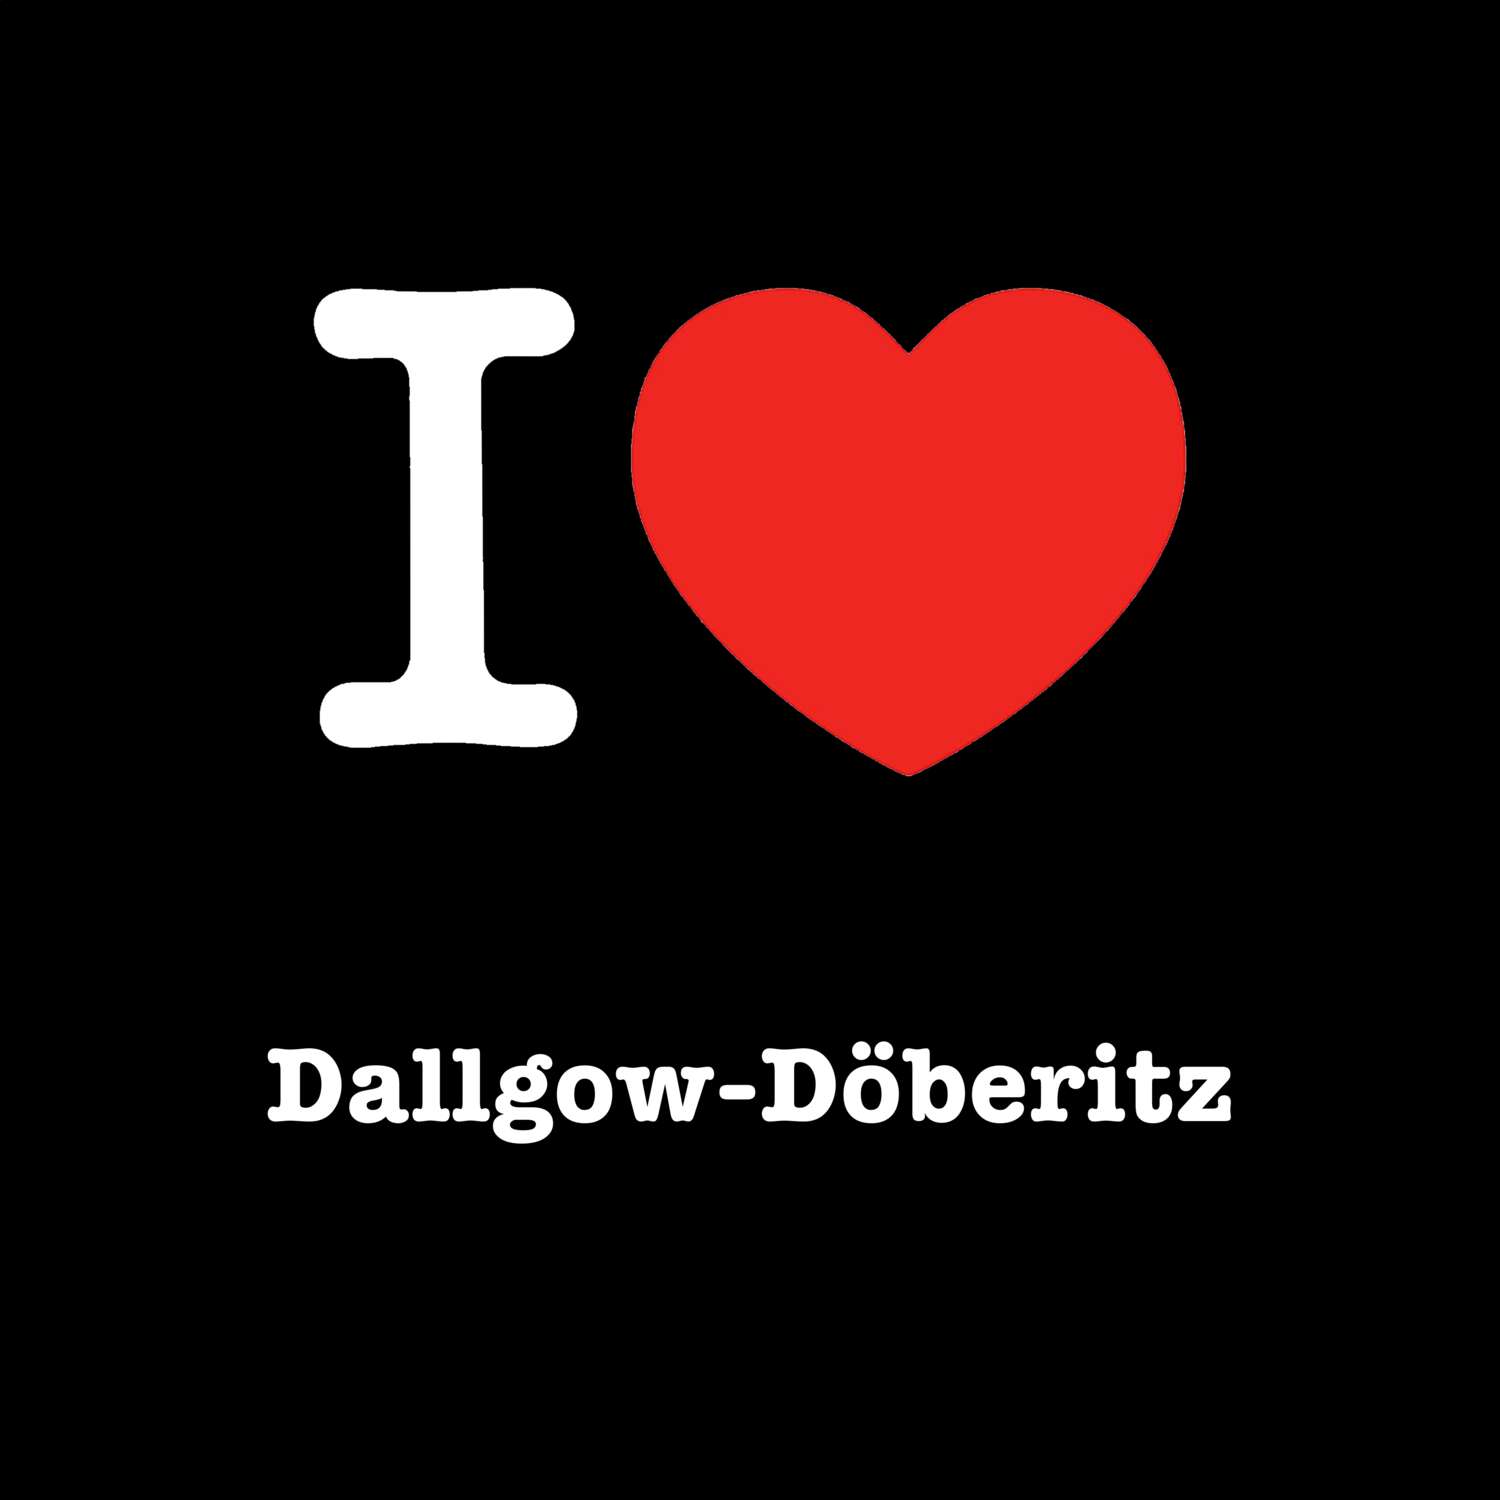 Dallgow-Döberitz T-Shirt »I love«